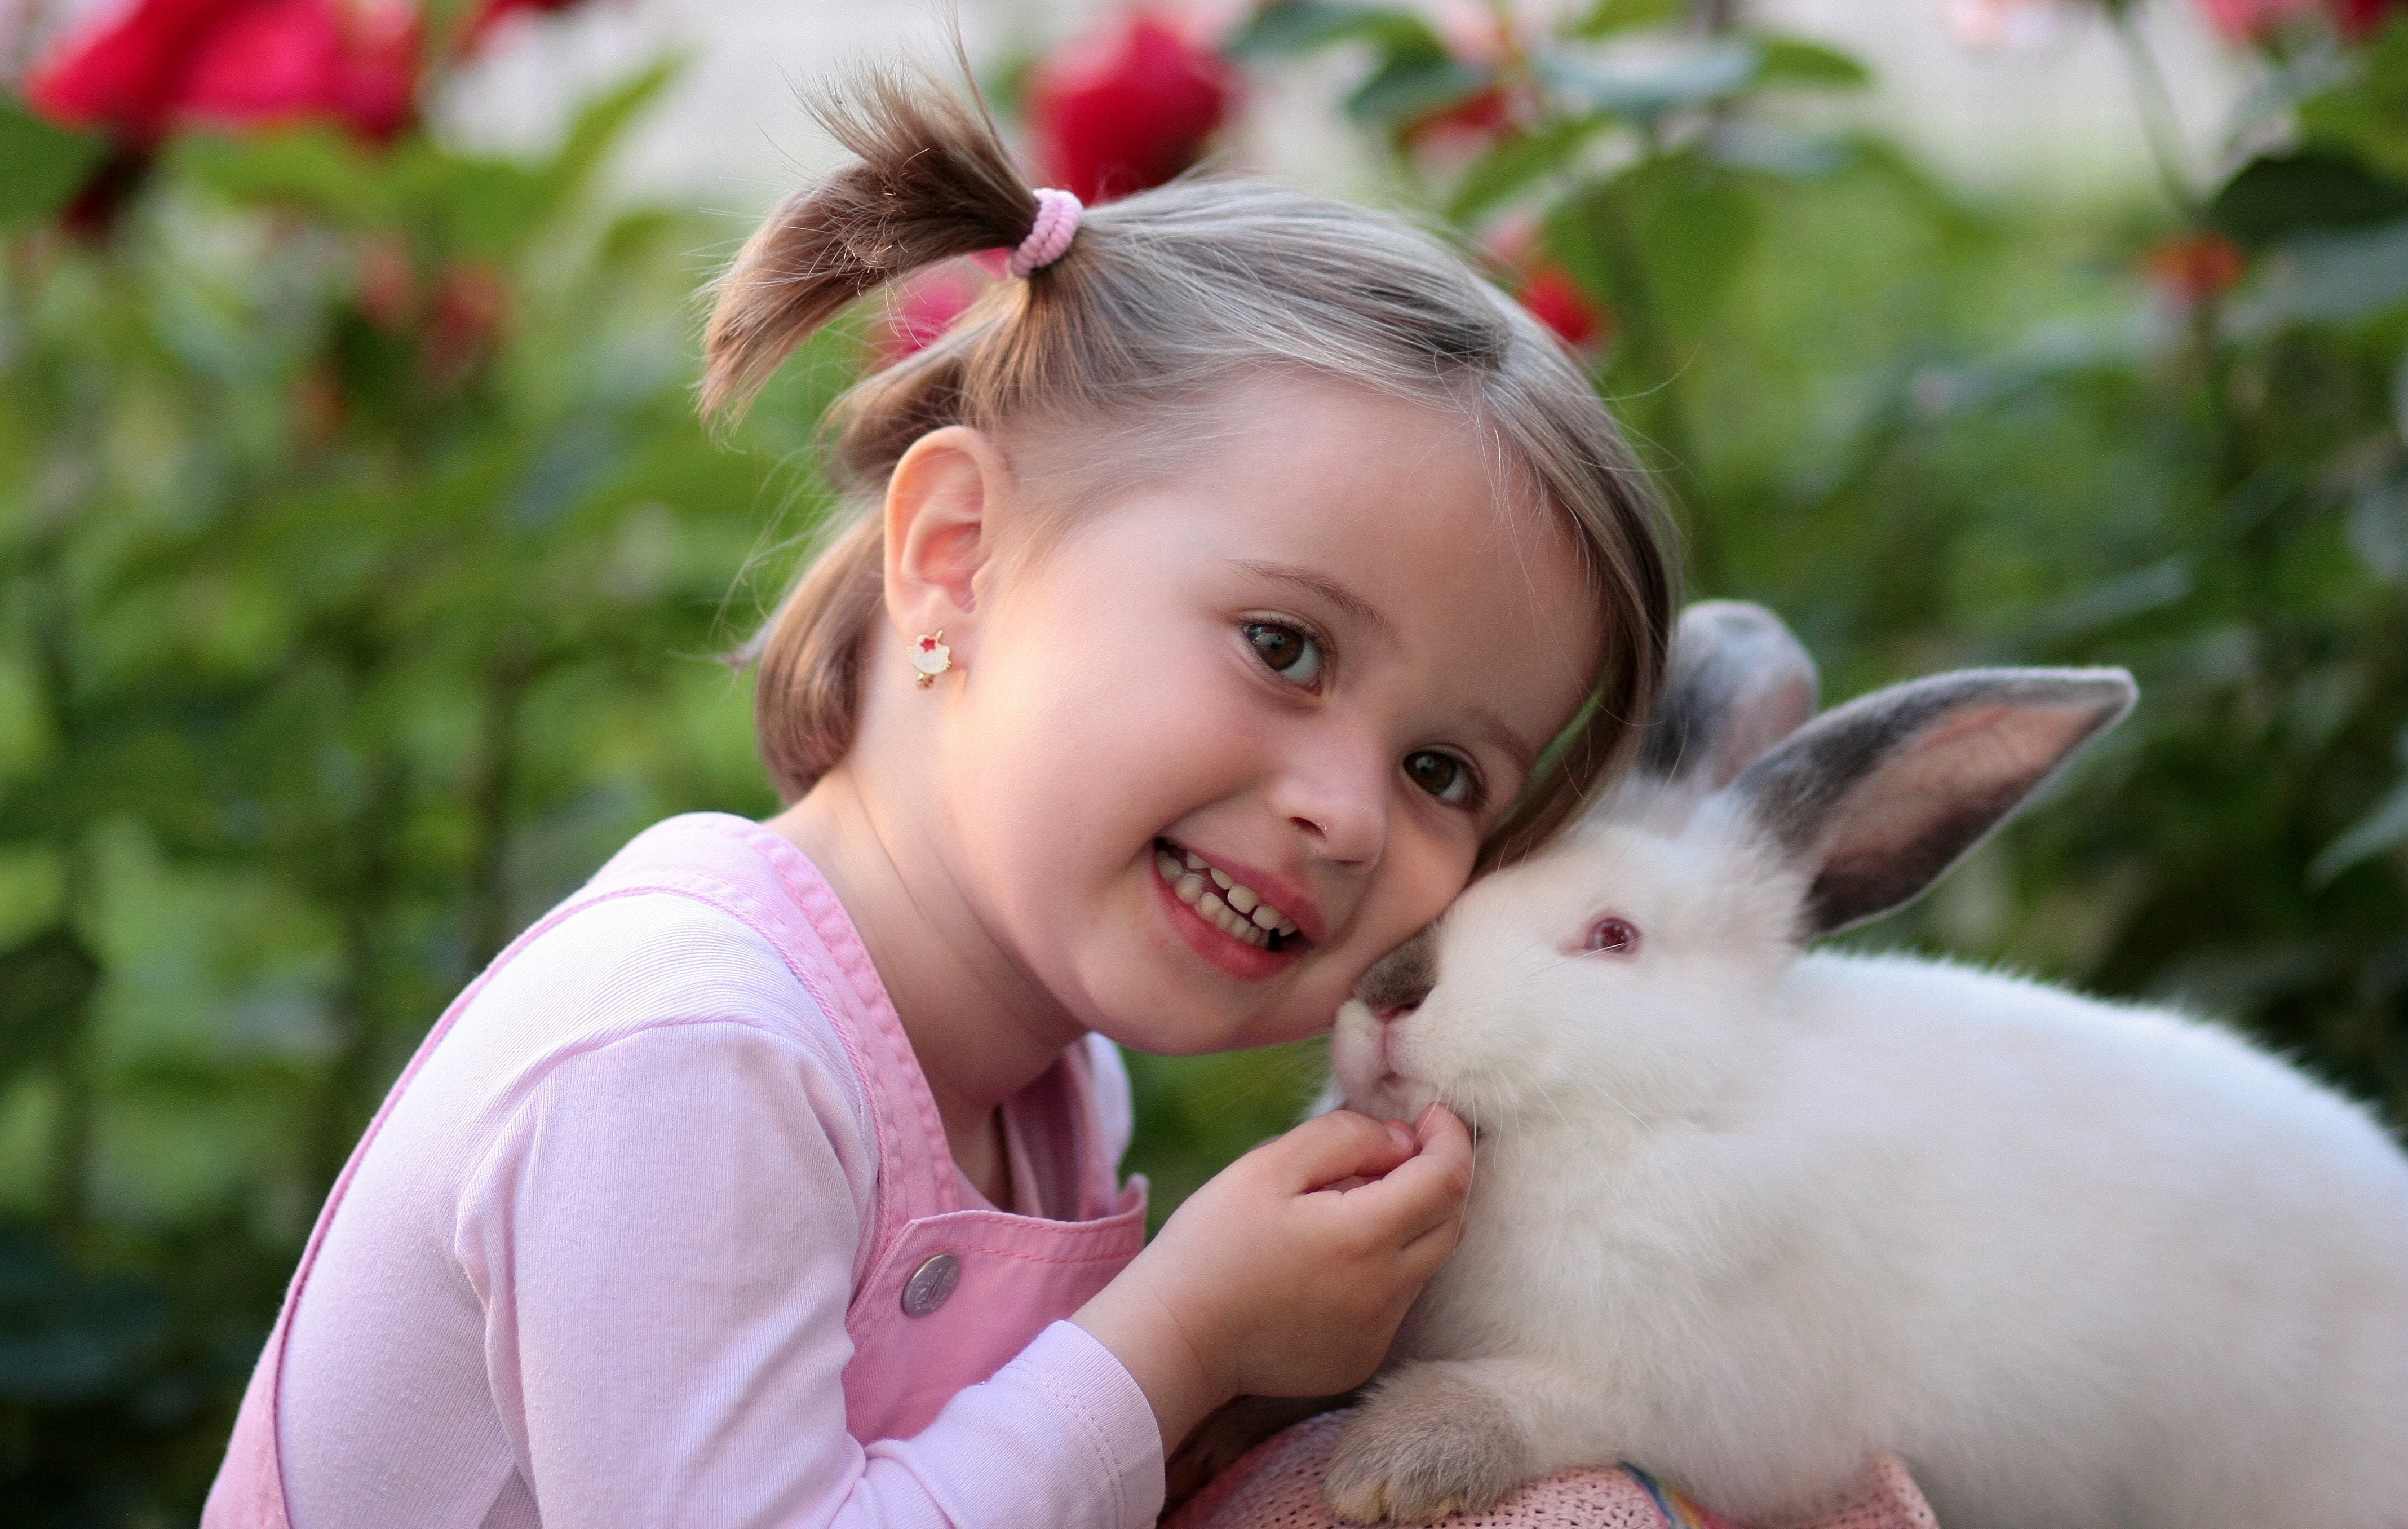 Bunny Child Cute Little Girl 4272x2712